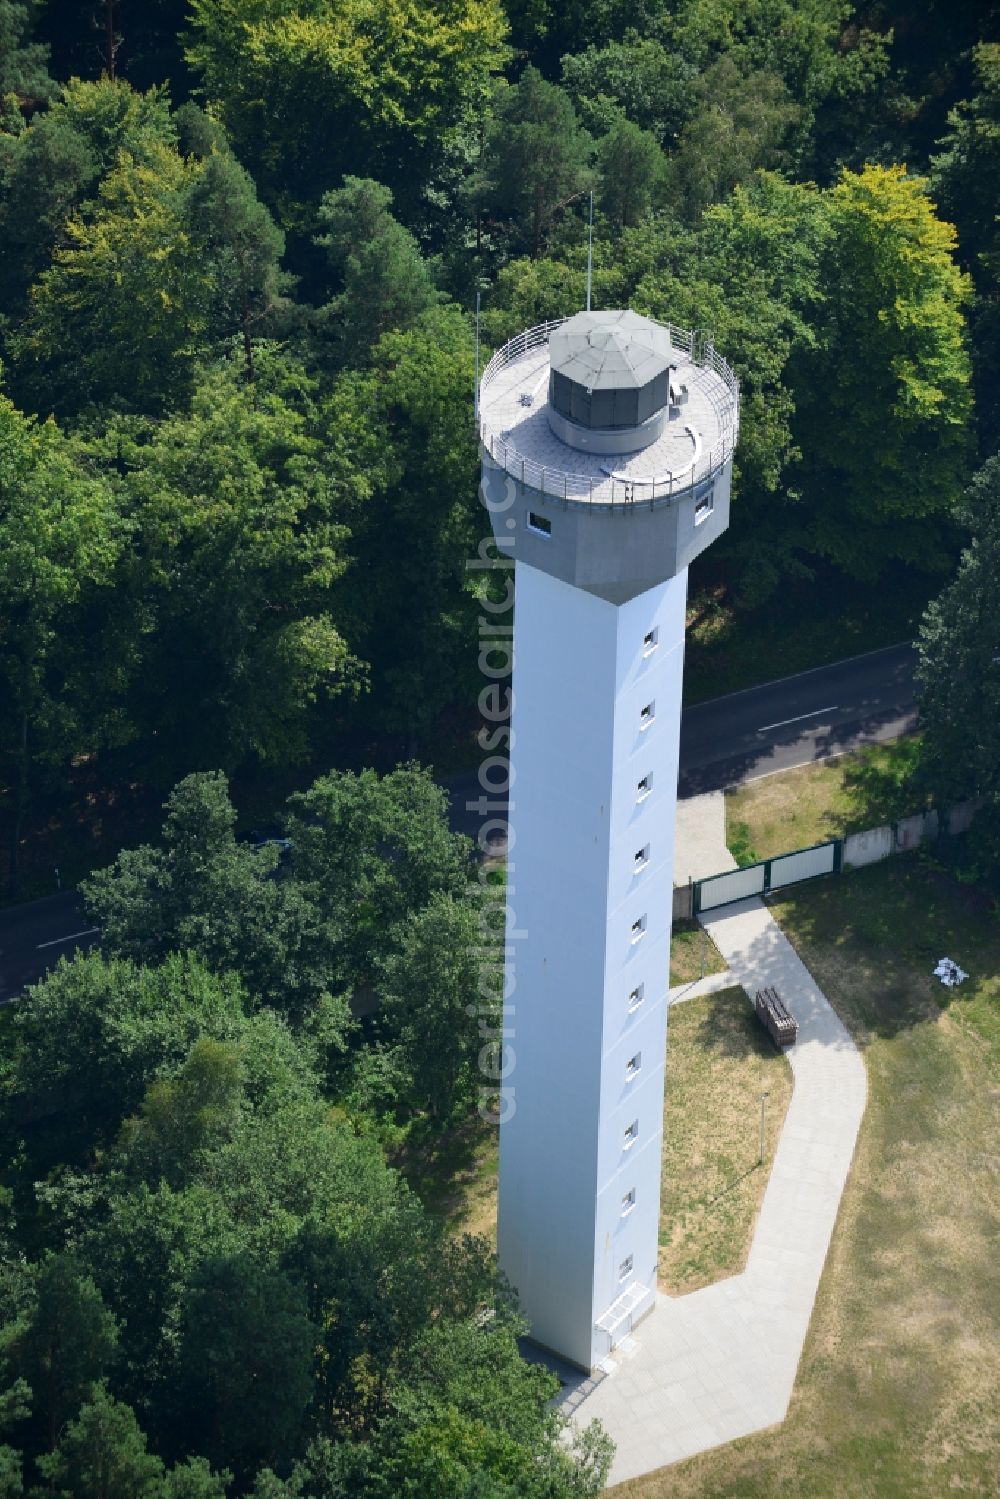 PRÖTZEL OT Heidekrug from above - Aereal of weather radar tower operated by DWD in the grounds of the former barracks Heidekrug